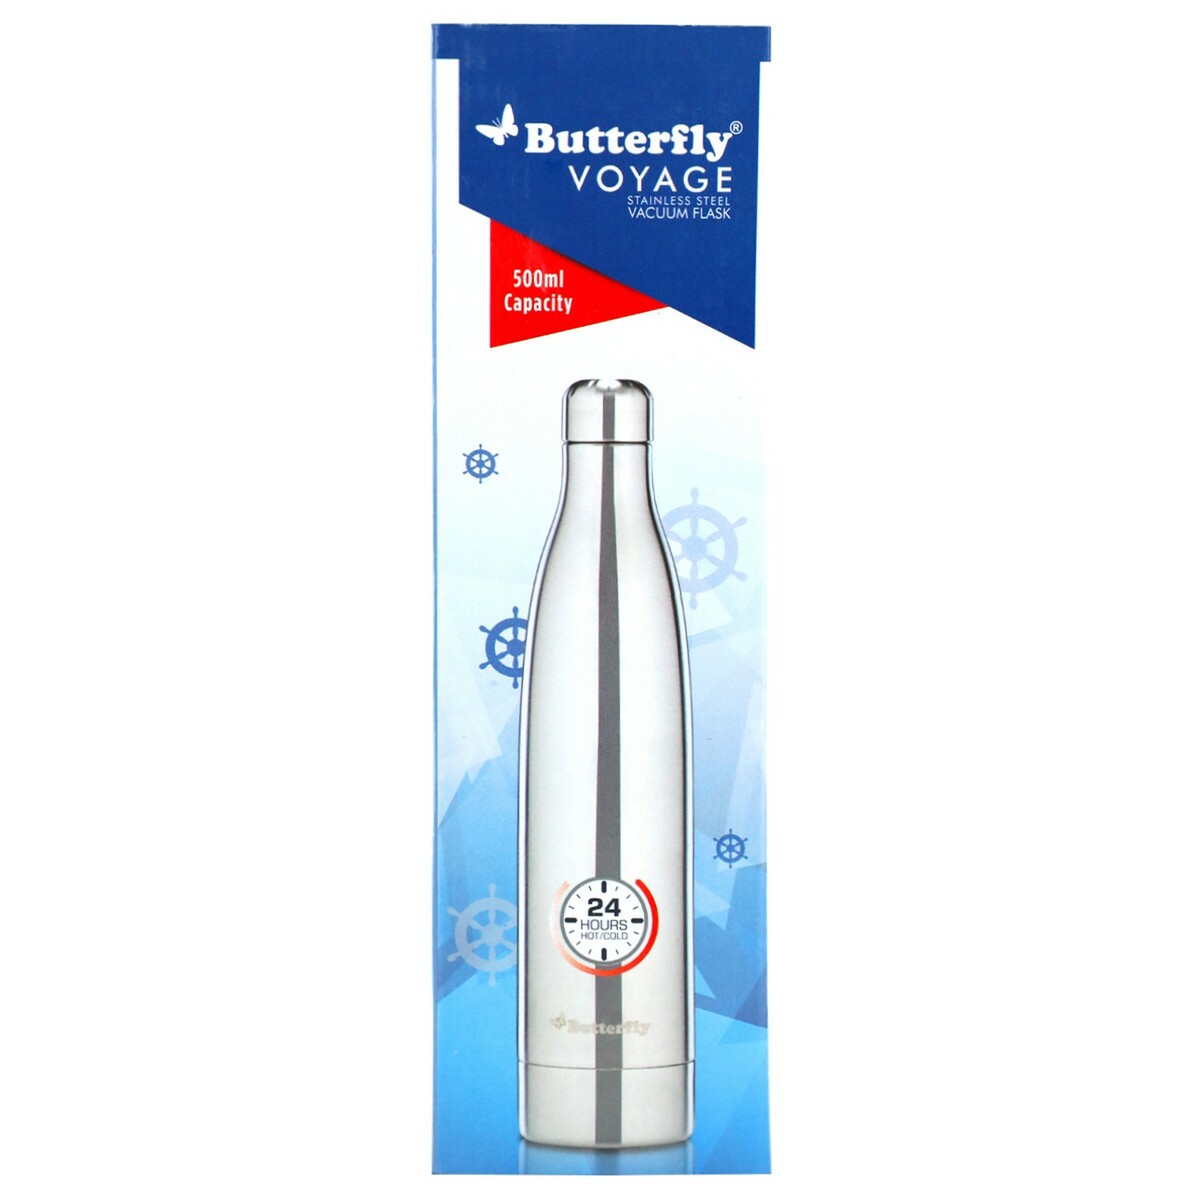 Butterfly Voyage Stailess Steel Vaccum Flask 500ml